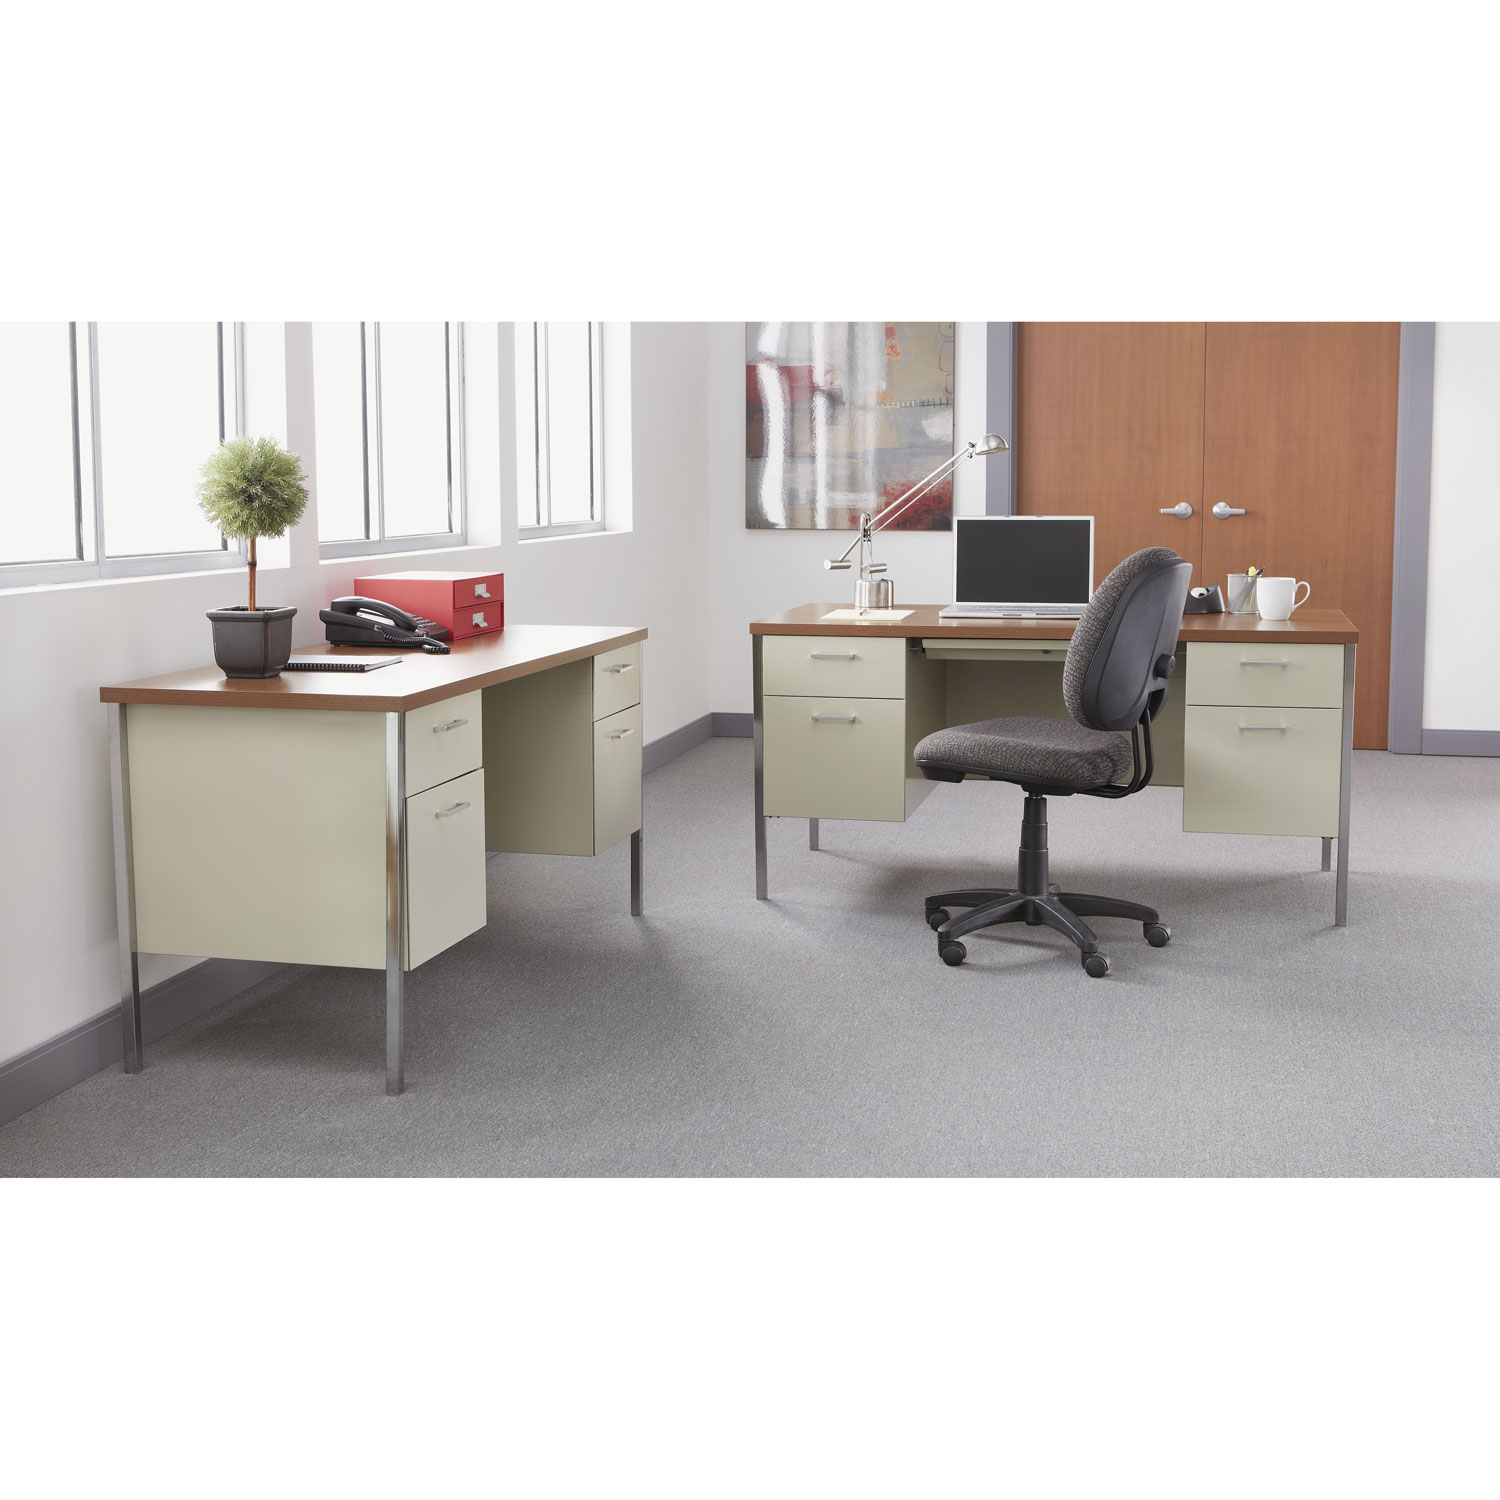 Single Pedestal Steel Desk, Metal Desk, 45-1/4w x 24d x 29-1/2h, Cherry/Putty